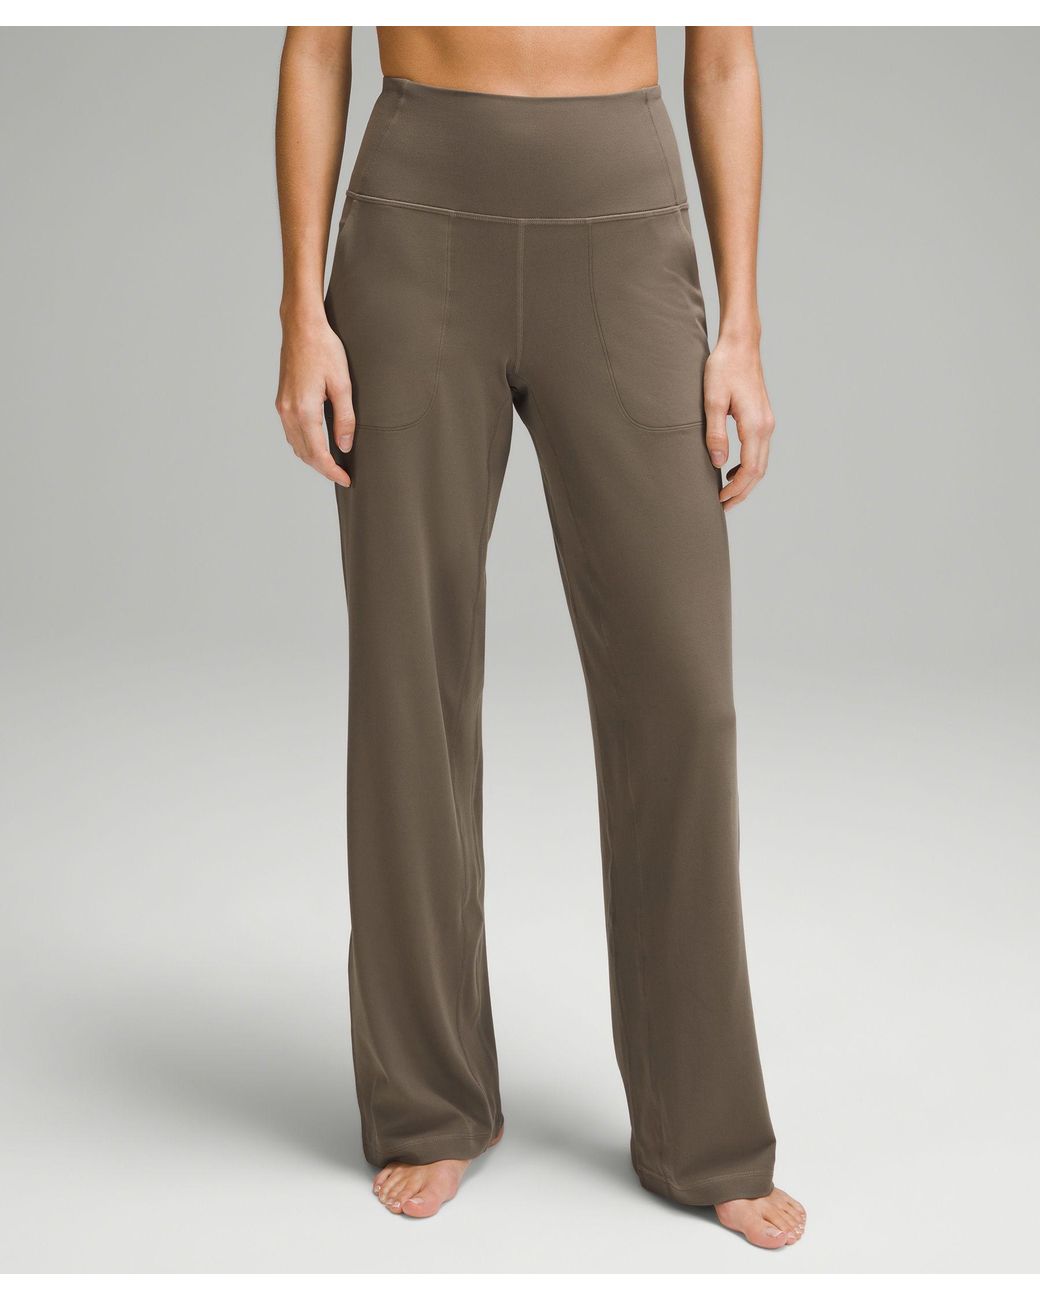 lululemon athletica Align High-rise Wide-leg Pants Regular - Color Brown -  Size 14